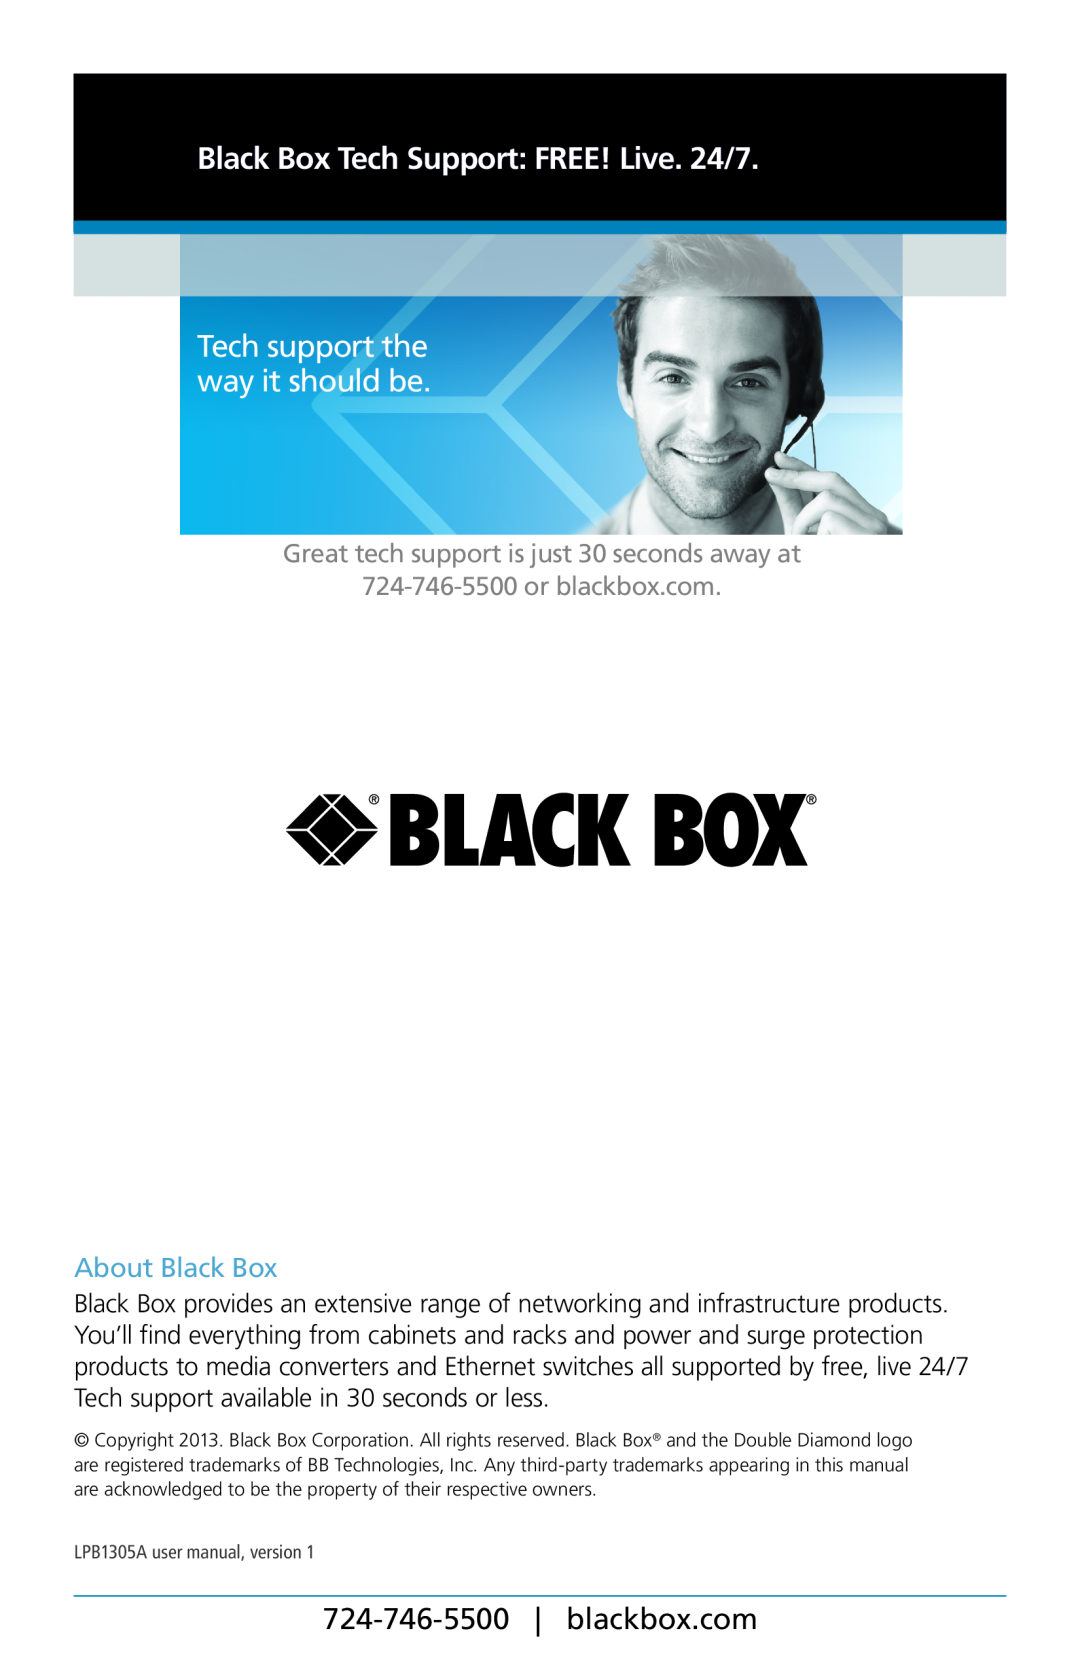 Black Box LPB1305A user manual Tech support the way it should be, Black Box Tech Support FREE! Live. 24/7, blackbox.com 